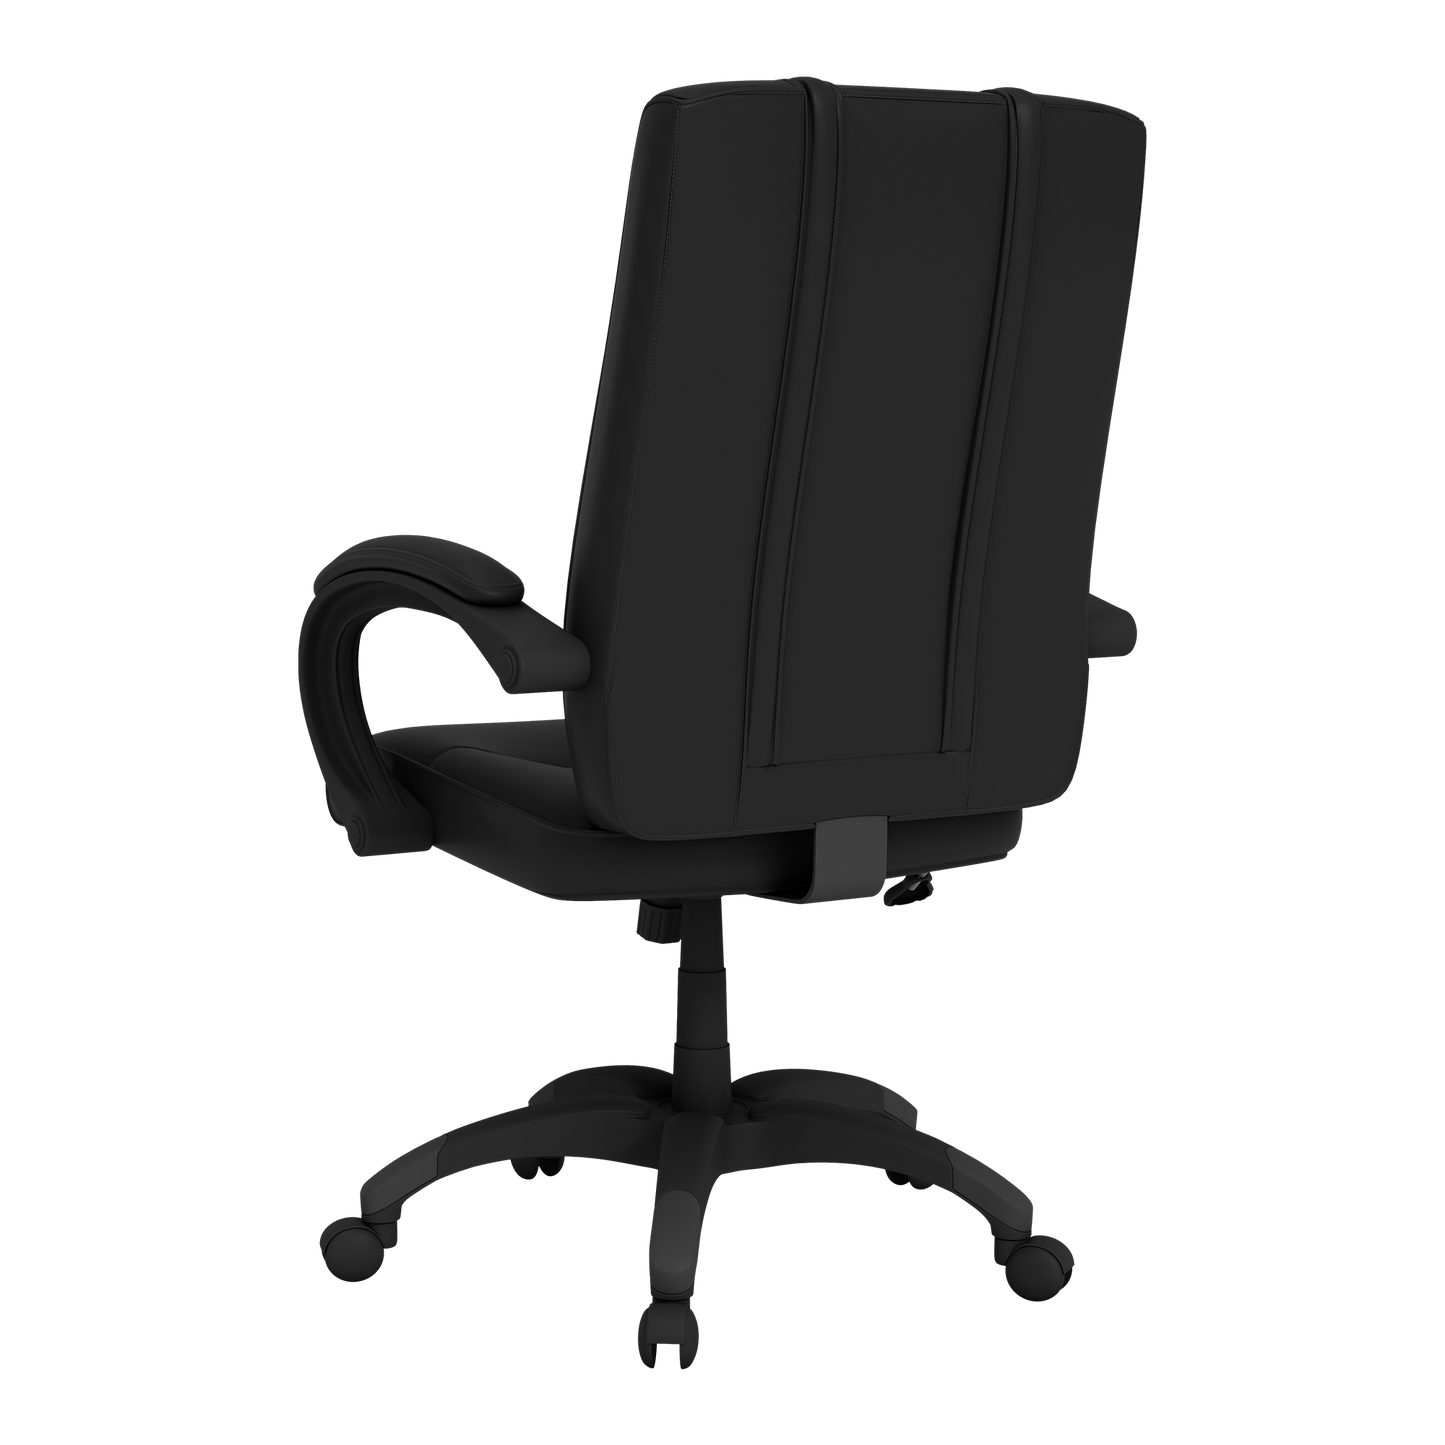 Office Chair 1000 with Syracuse Orange Logo